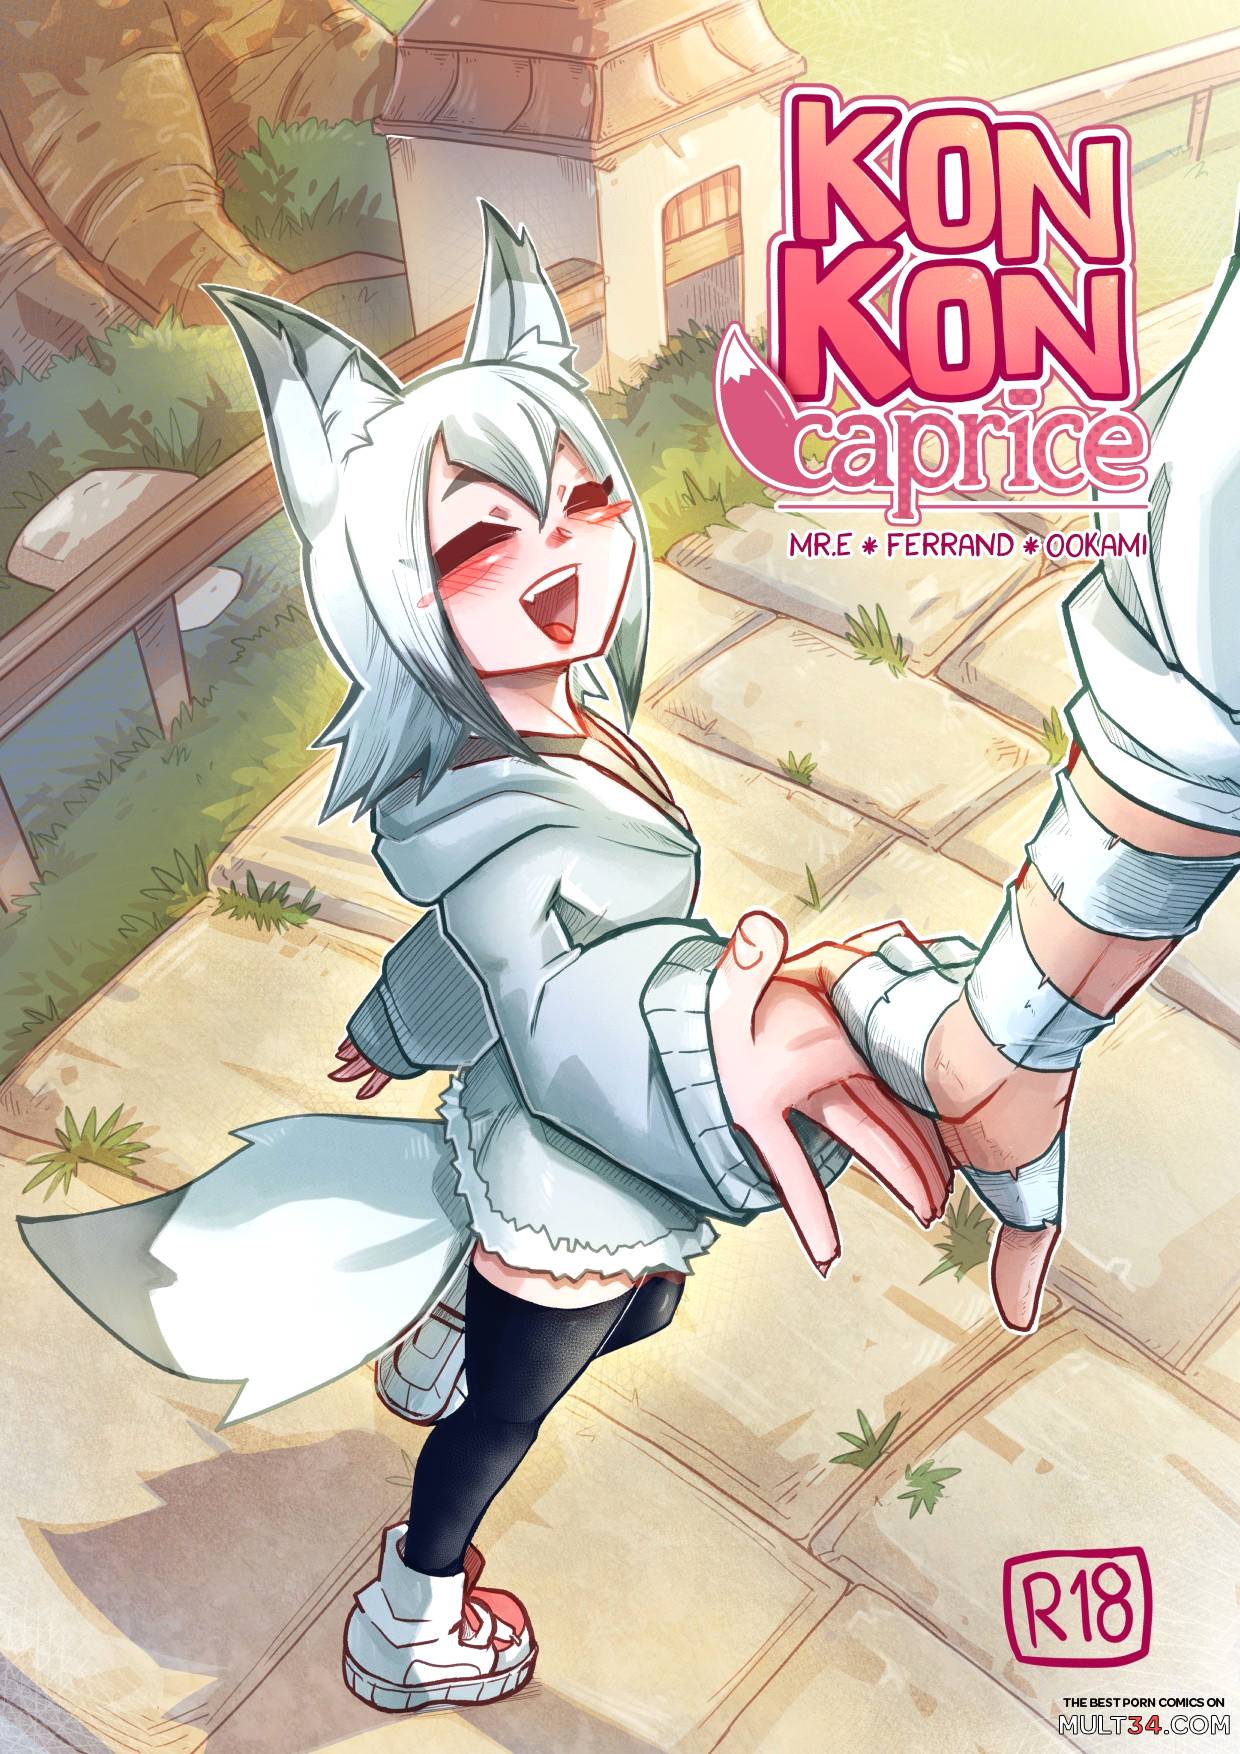 Xxx Kon - Kon Kon Caprice porn comic - the best cartoon porn comics, Rule 34 | MULT34